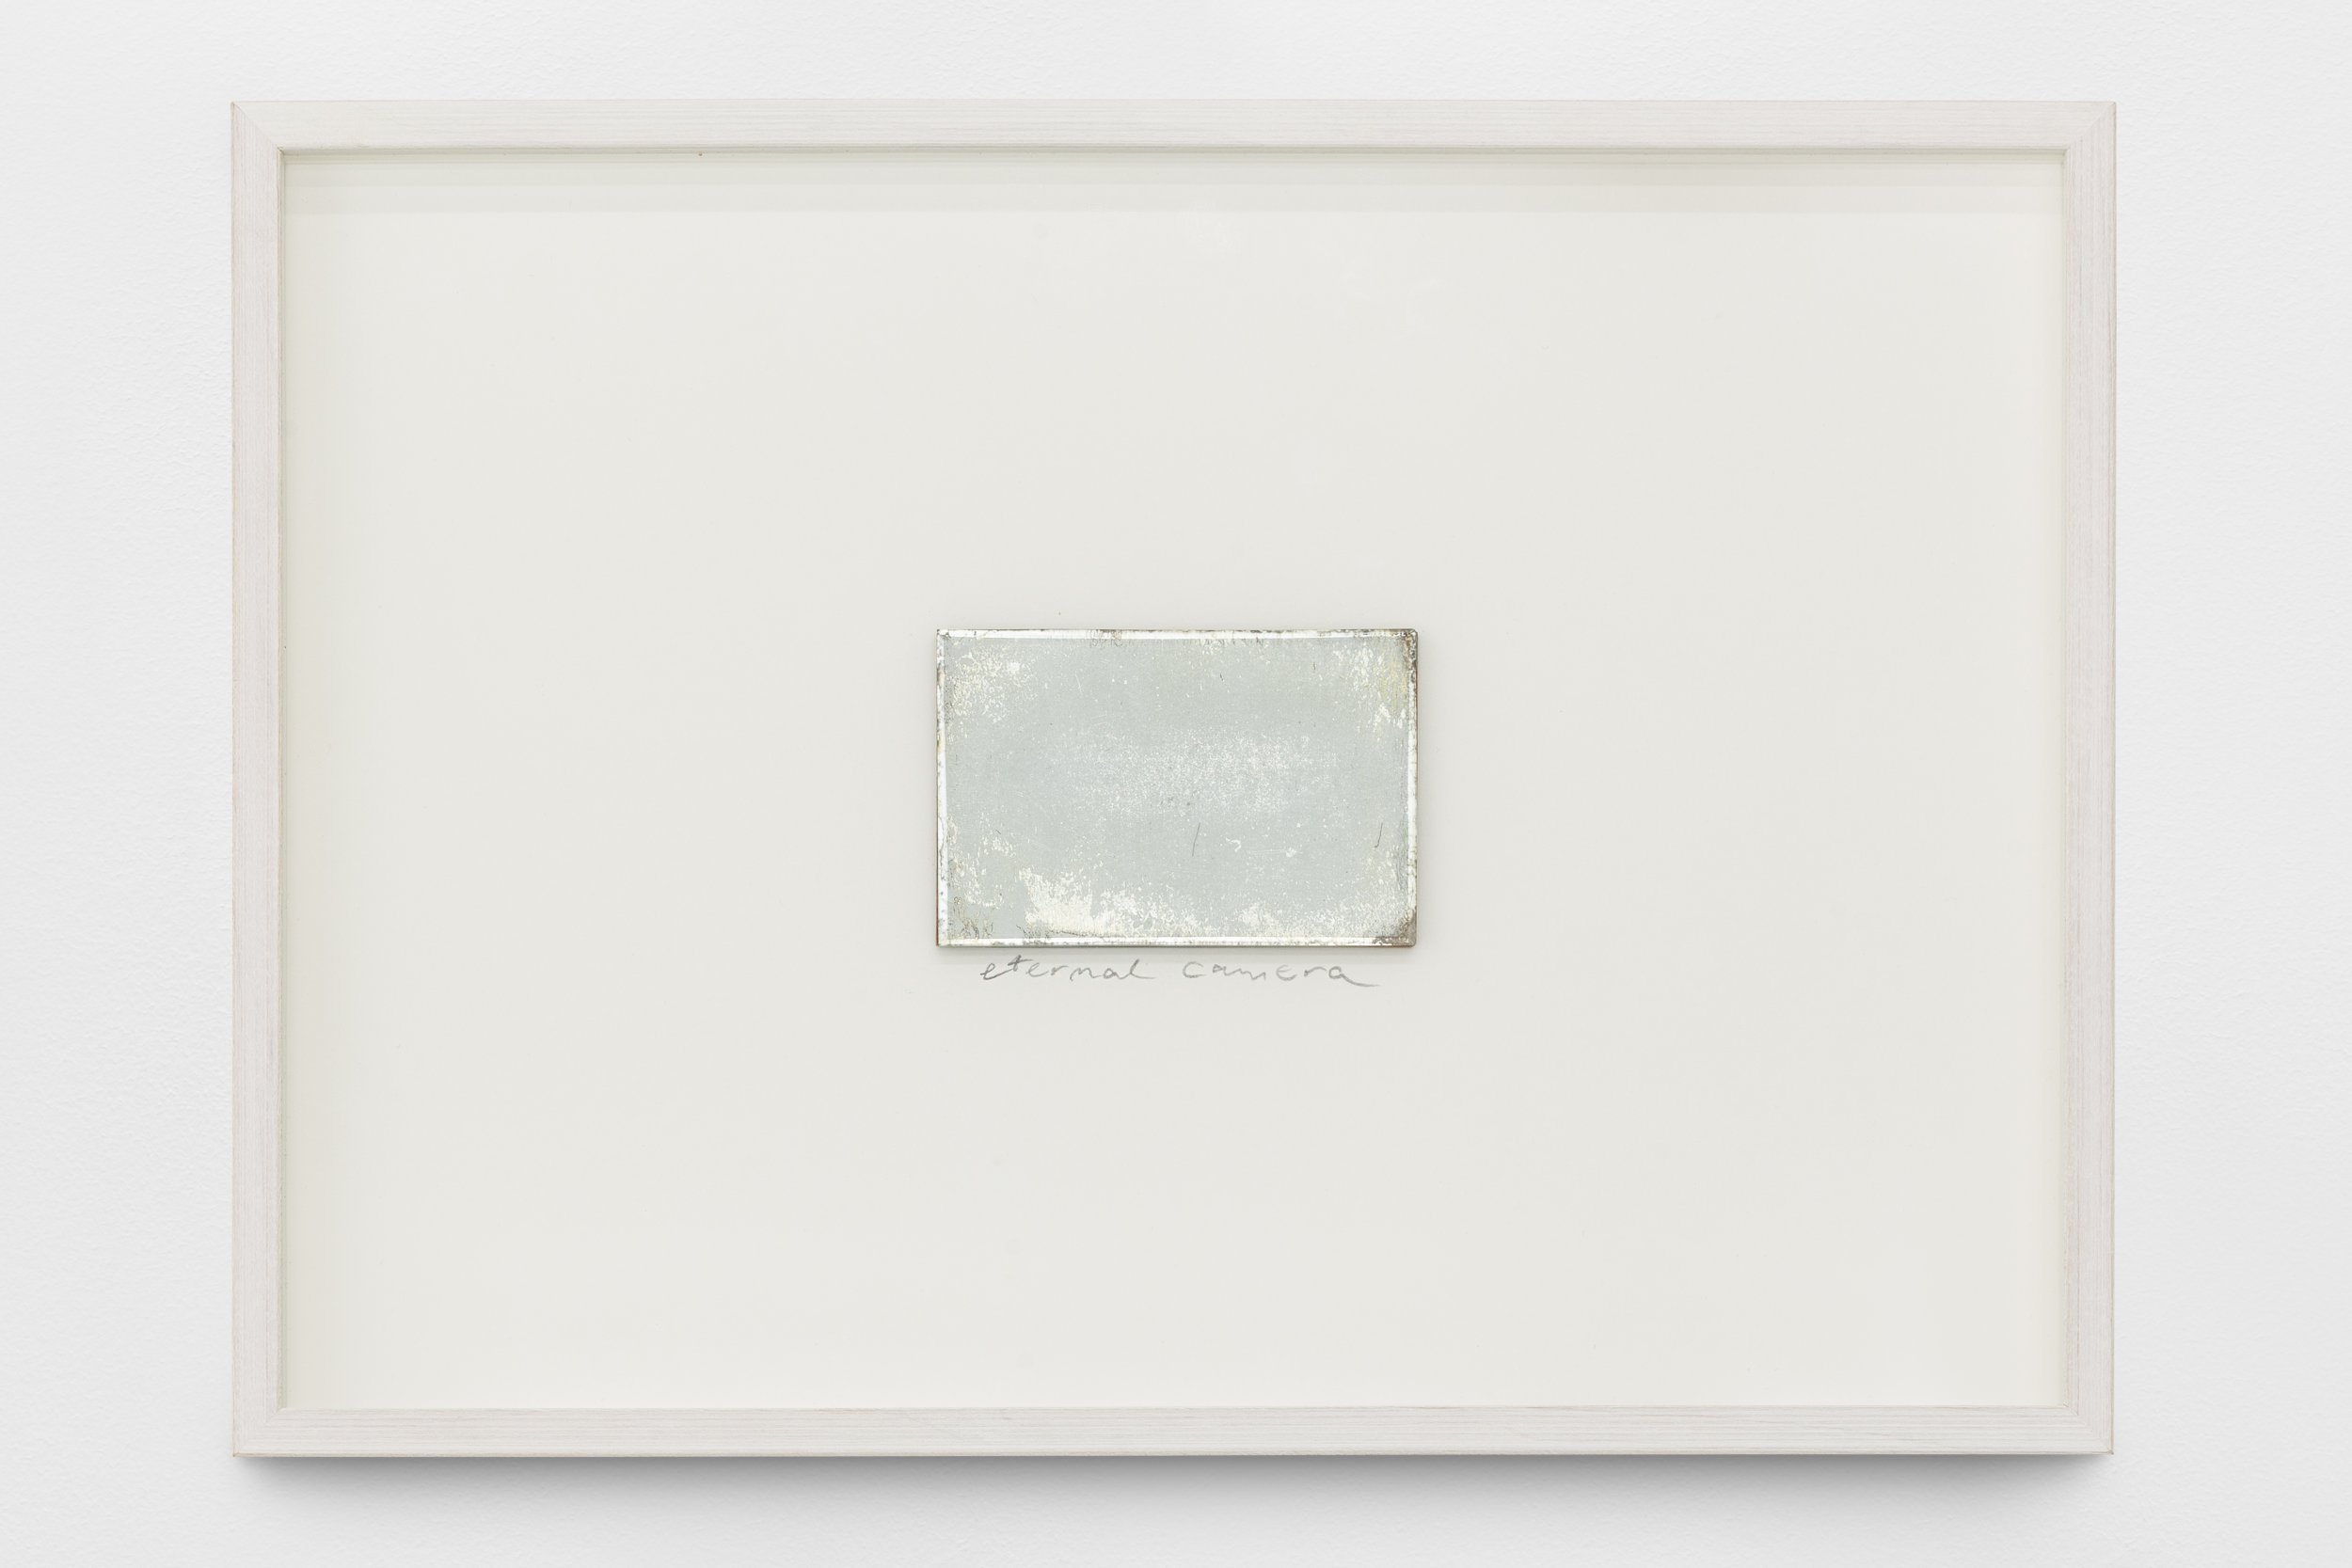 Daniel Blaufuks, Eternal Camera 1, 2018. Polished mirror, graphite. 21,8 x 30,5 cm. Edition 3 + 2 AP
